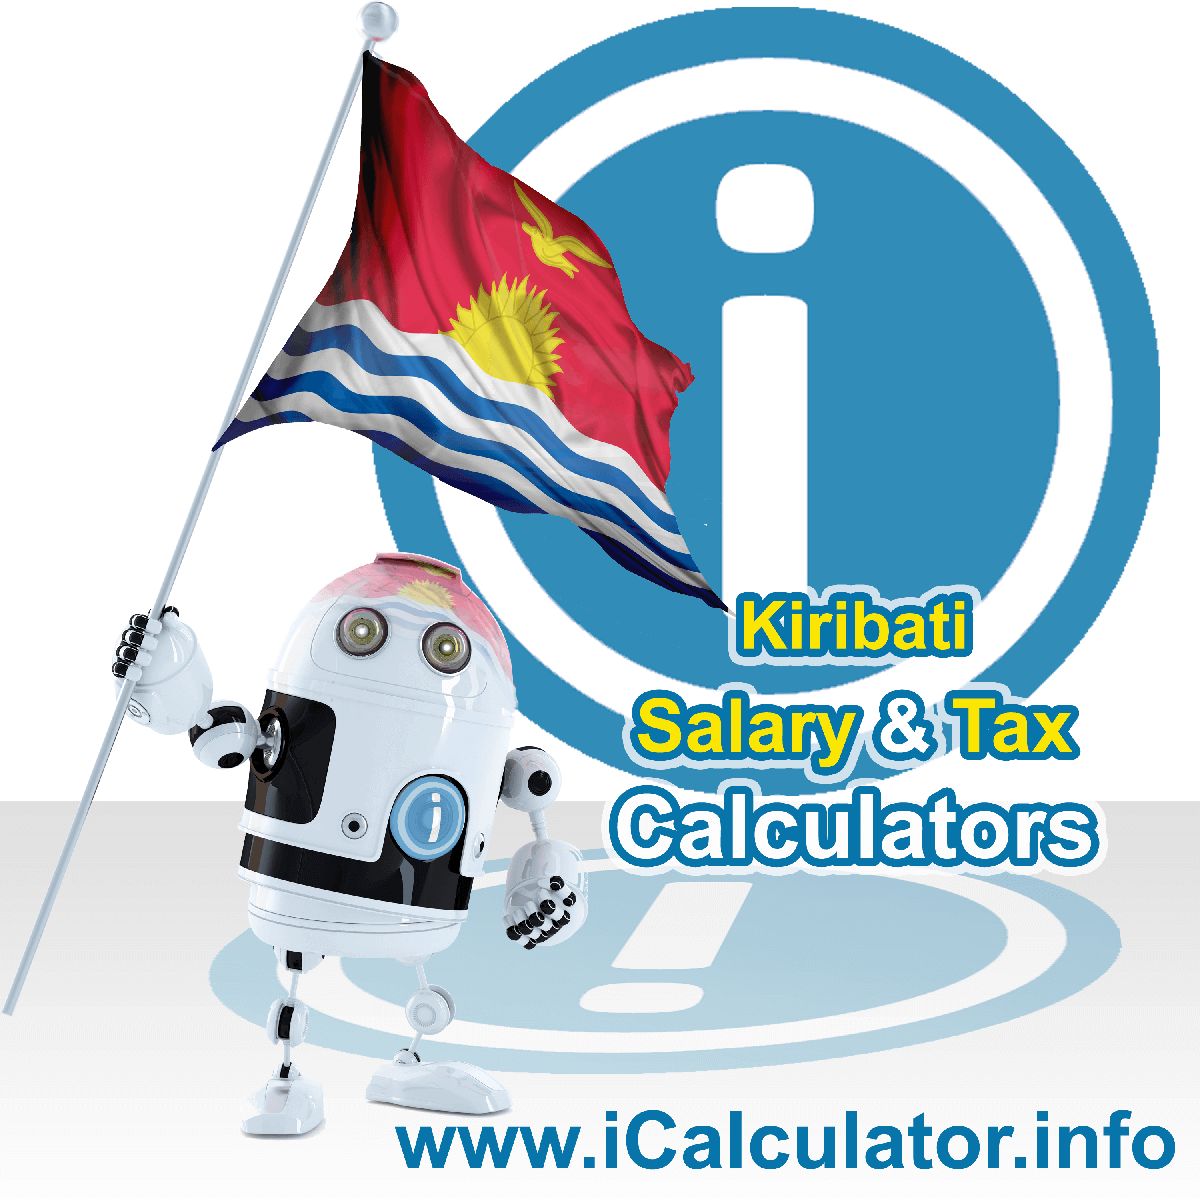 Kiribati Wage Calculator. This image shows the Kiribati flag and information relating to the tax formula for the Kiribati Tax Calculator